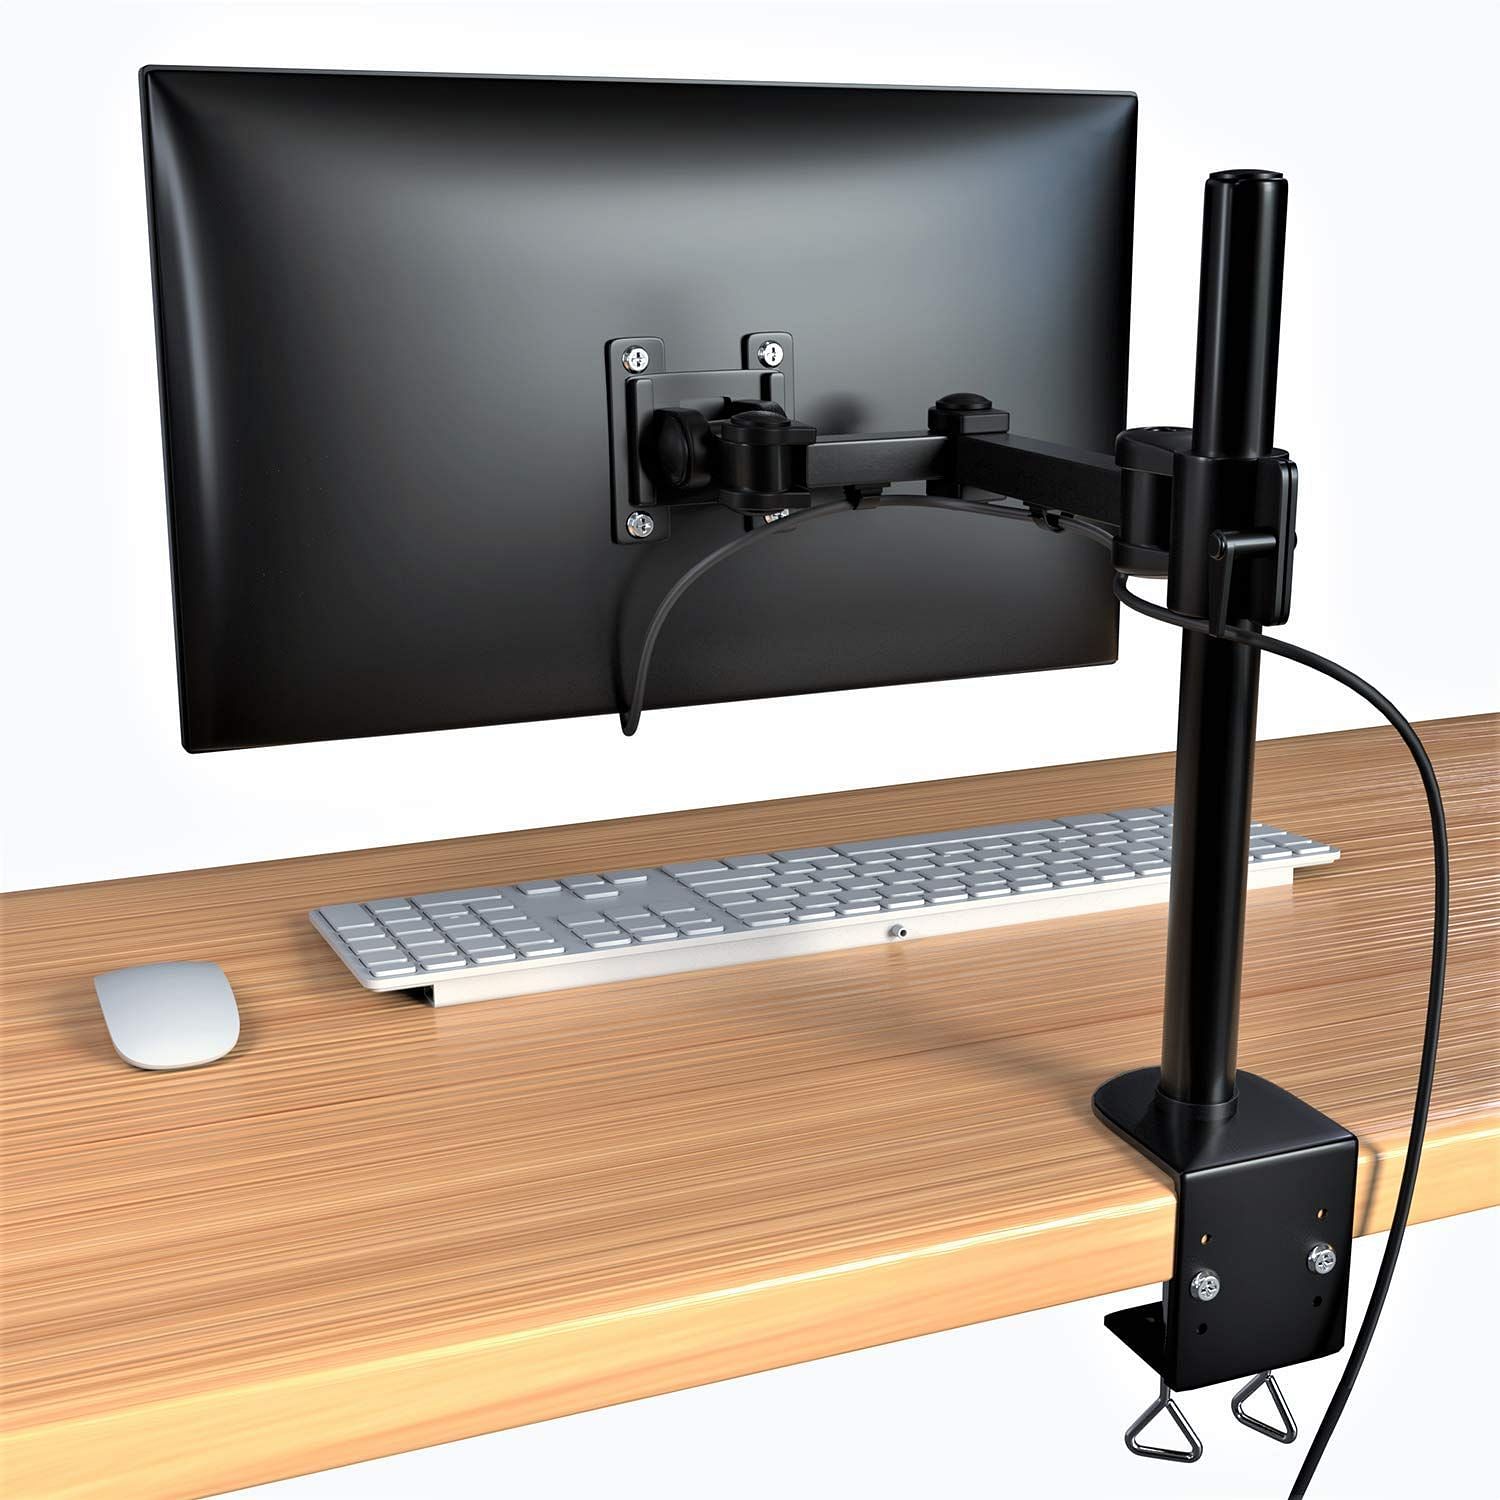 Rife monitor stand (Image via Amazon)